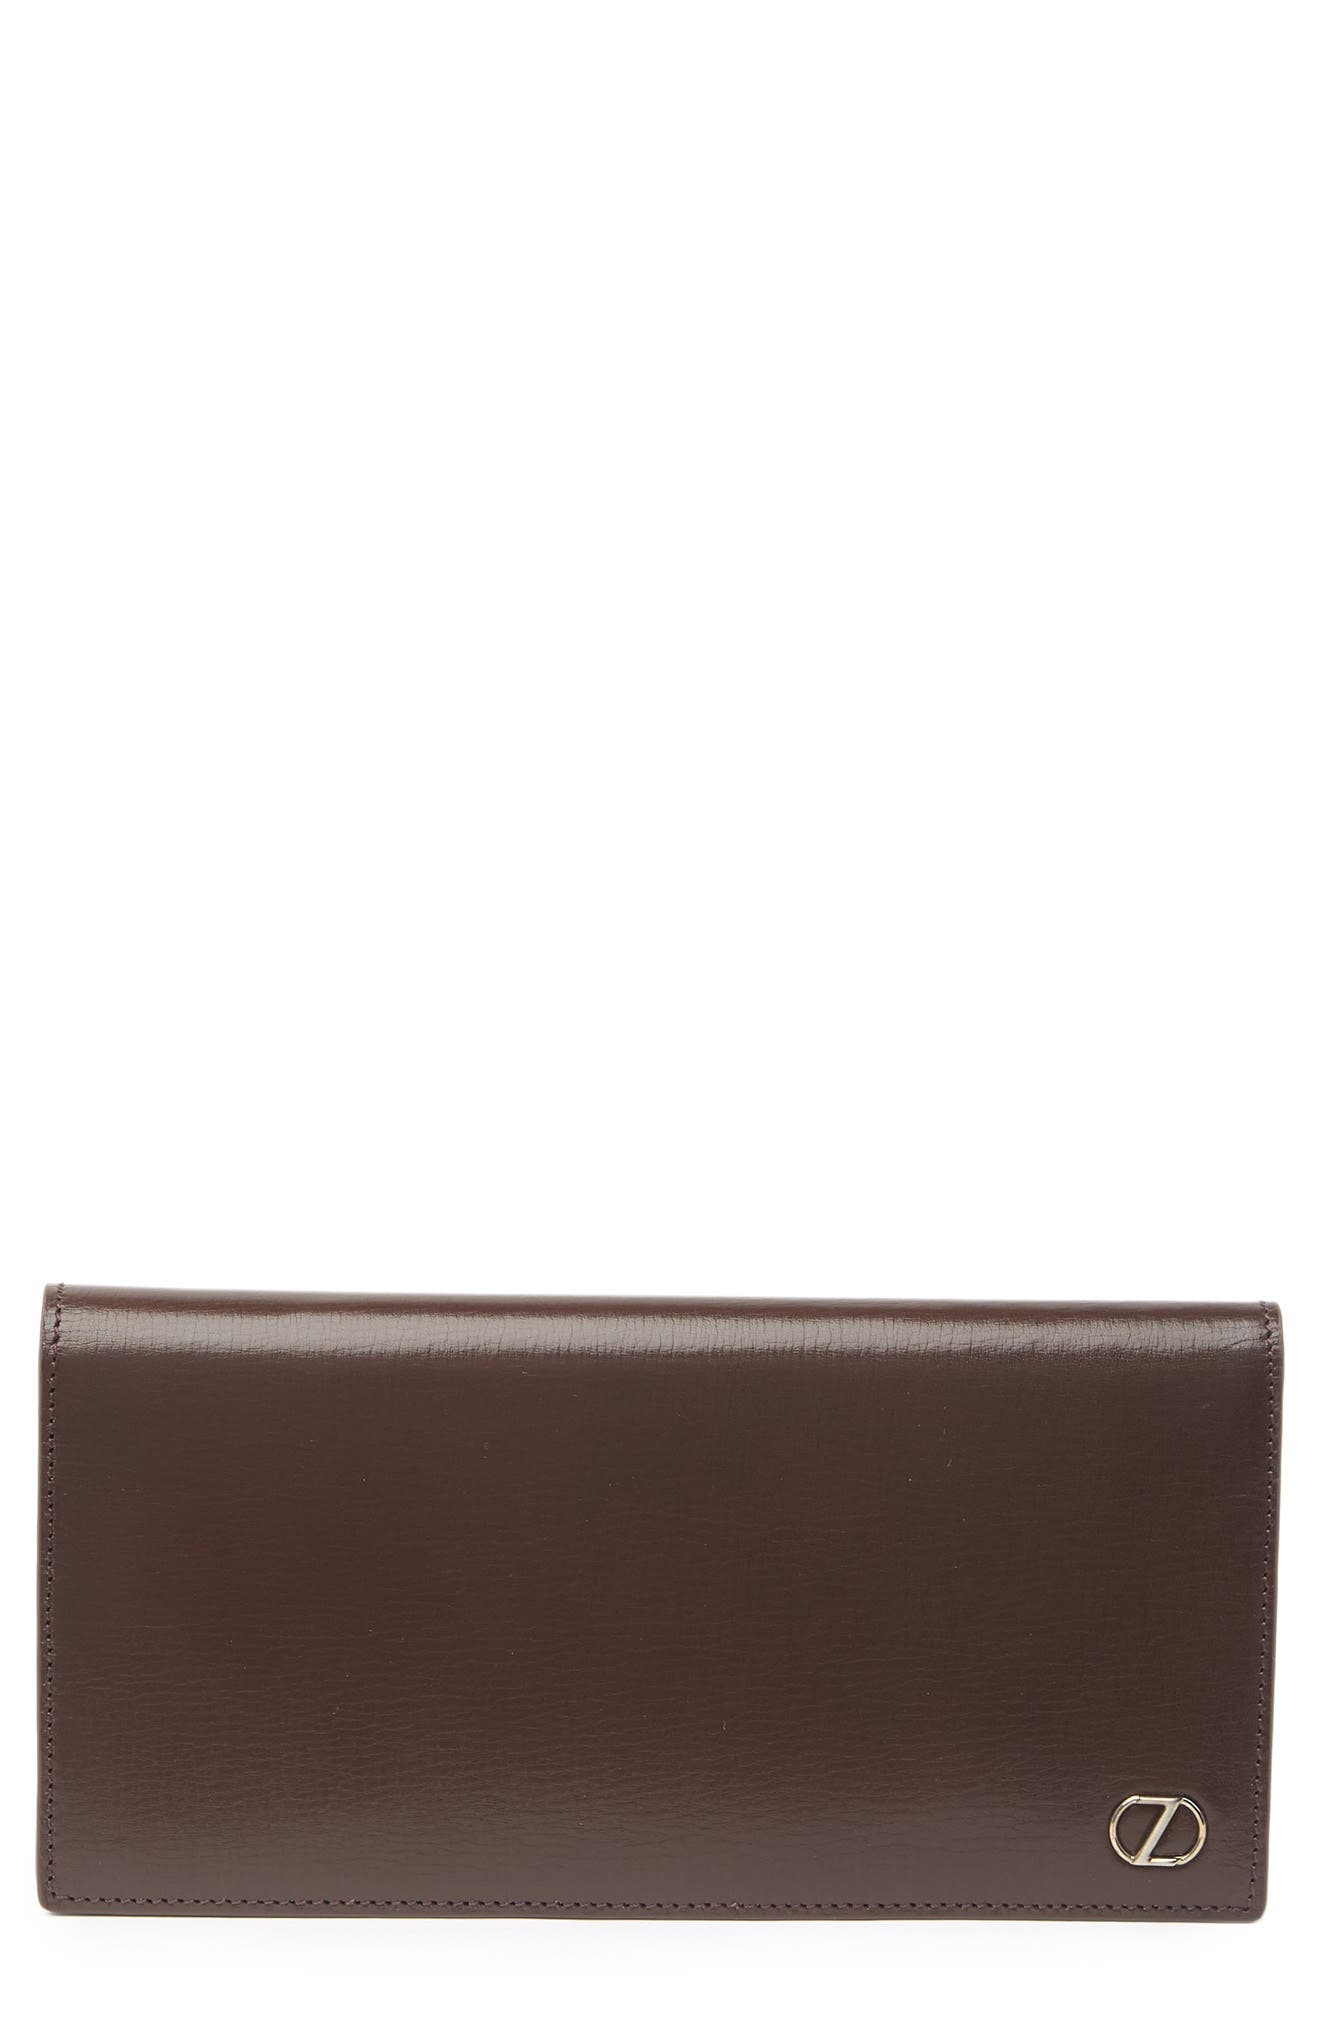 Ermenegildo Zegna Continental Leather Wallet In Brown